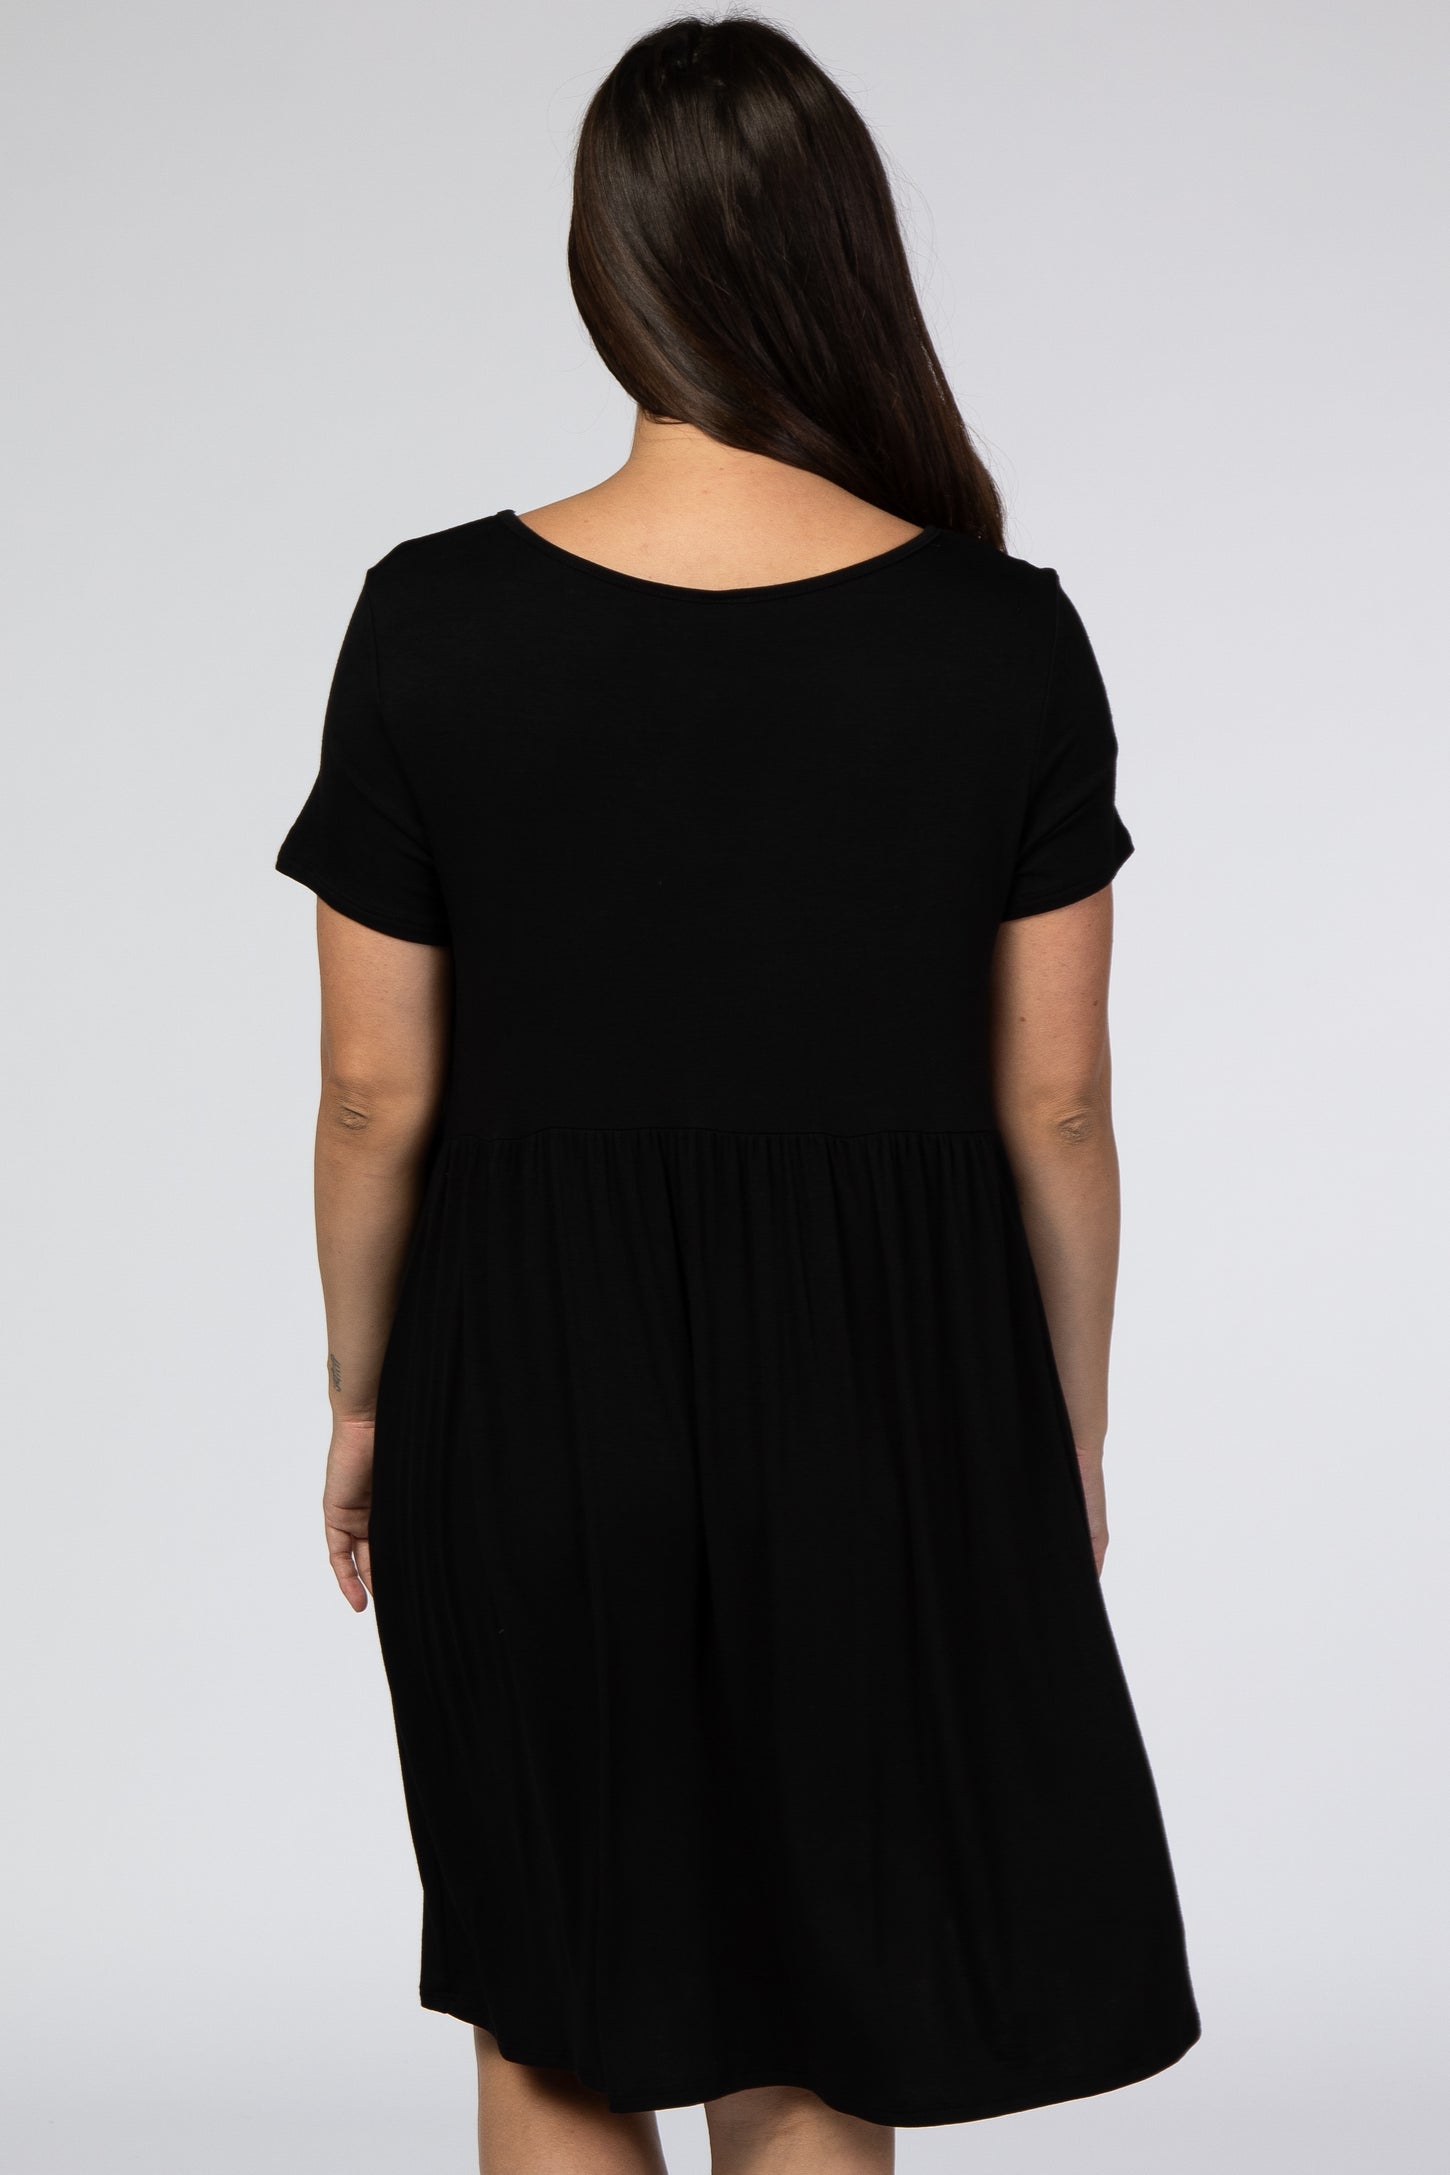 Black Short Sleeve Babydoll Maternity Dress– PinkBlush